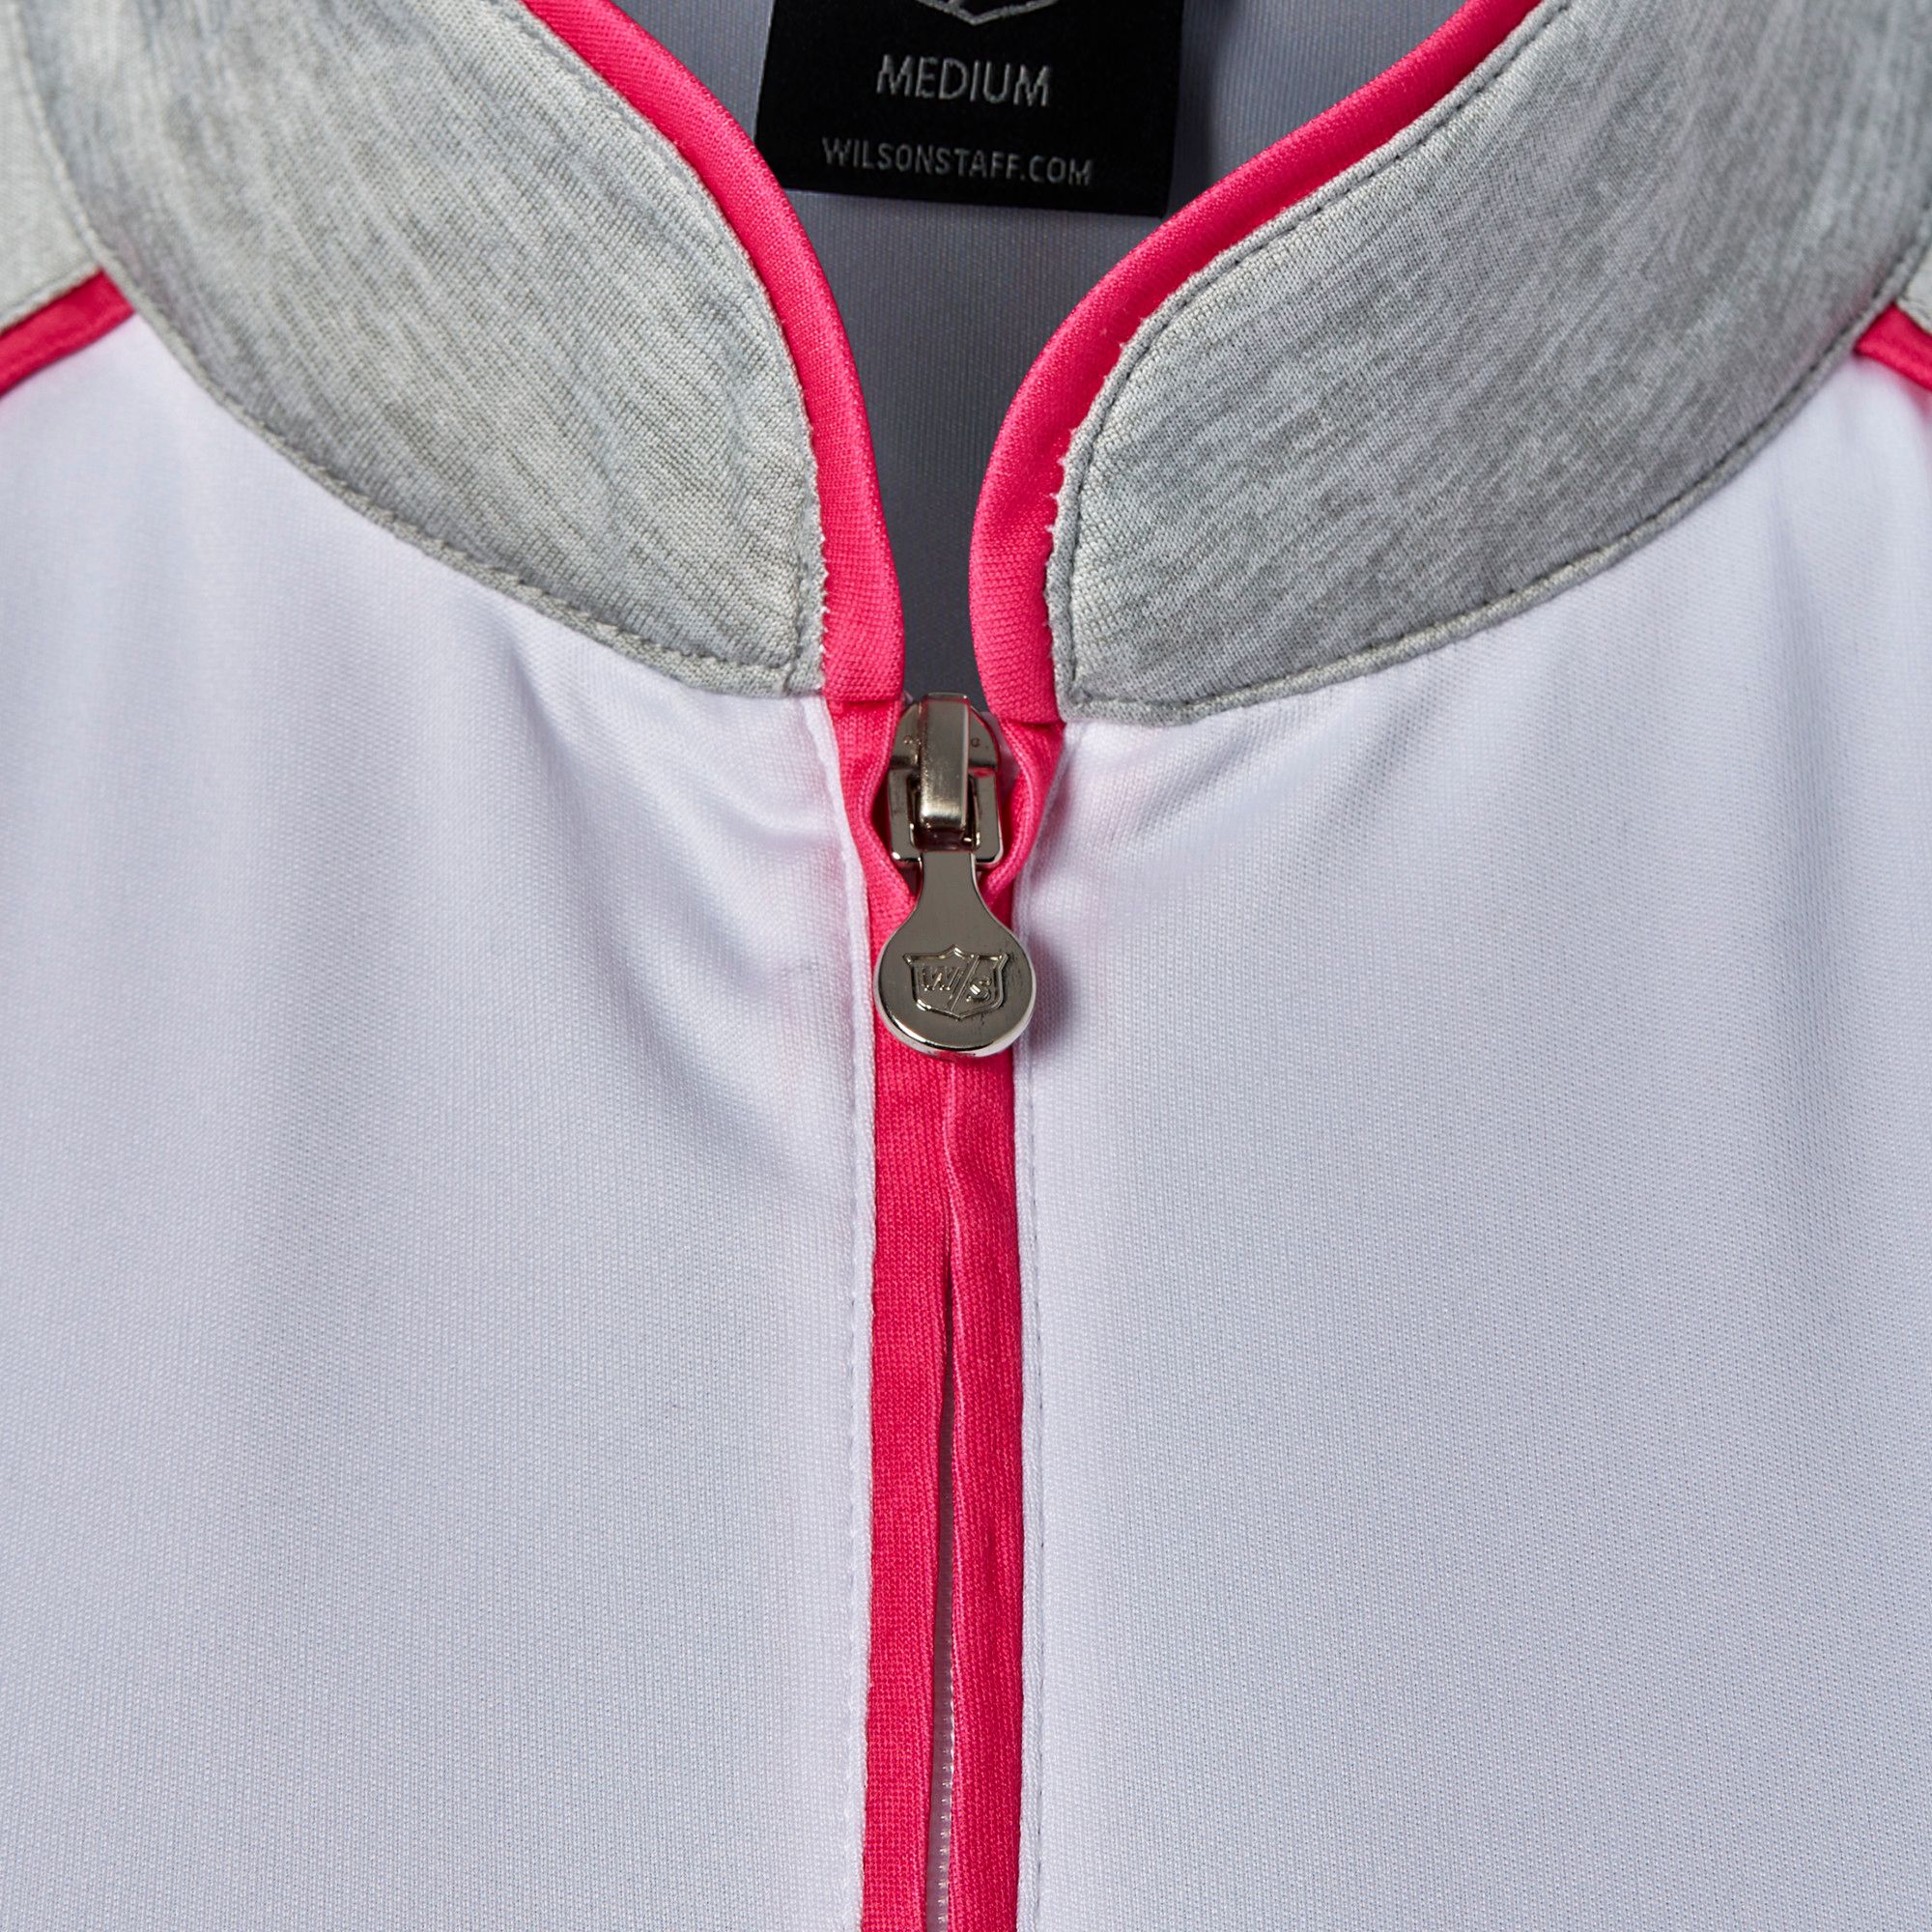  [S] Áo golf nữ Wilson Zipped Polo - White/Pink - Size S 